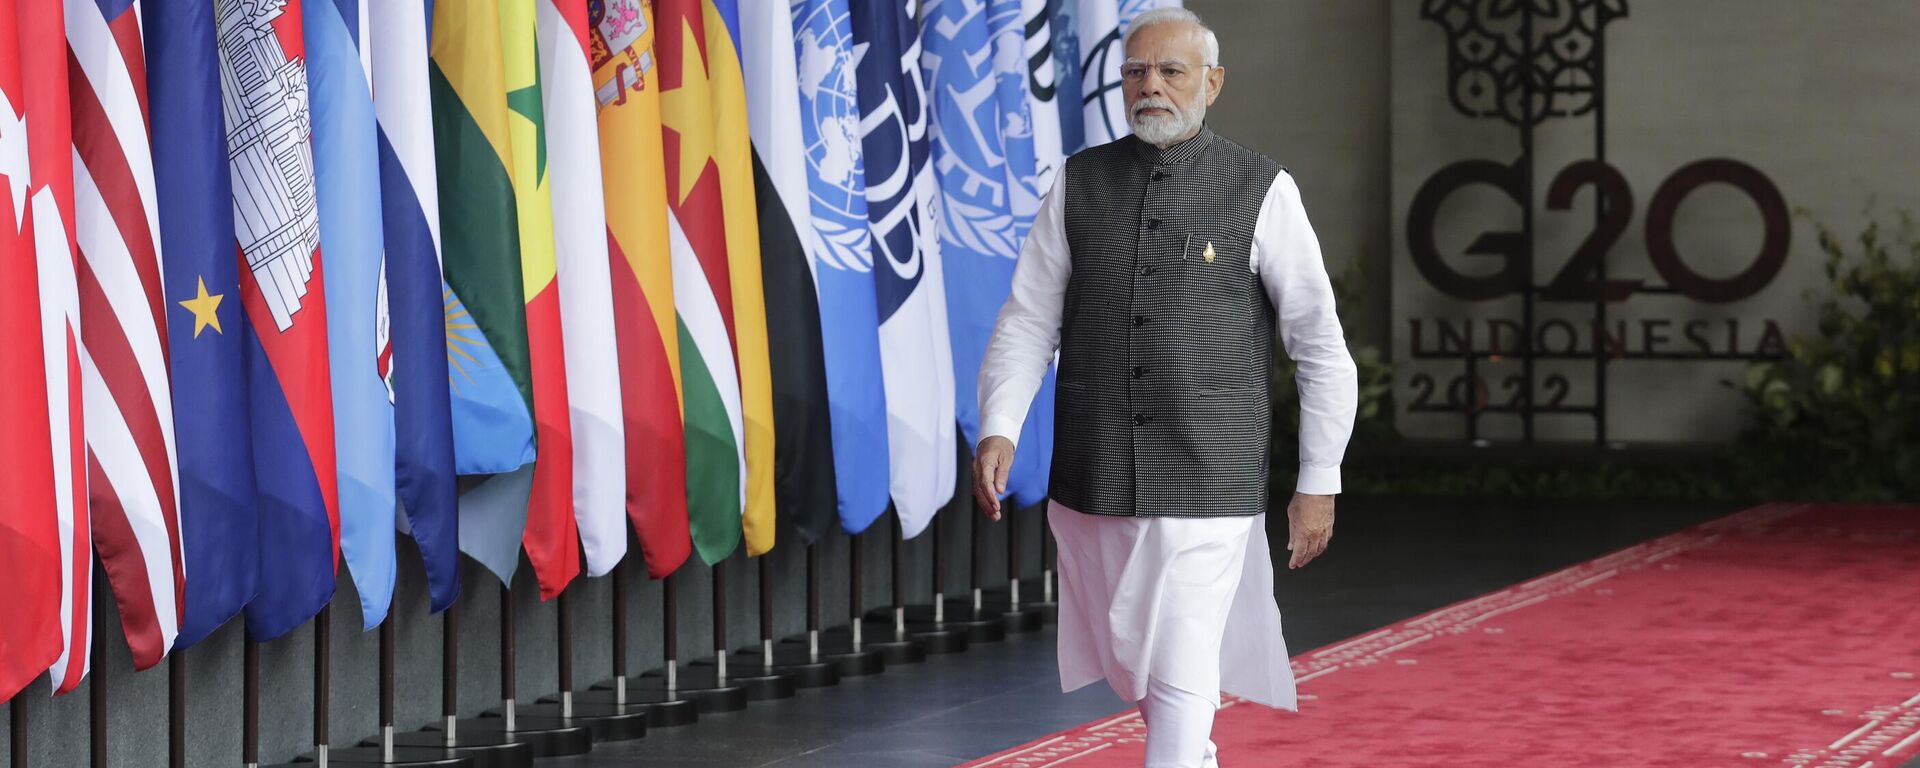 Indian Prime Minister Narendra Modi arrives during the G20 Summit in Nusa Dua, Bali, Indonesia, Tuesday Nov. 15, 2022. - Sputnik International, 1920, 15.11.2022